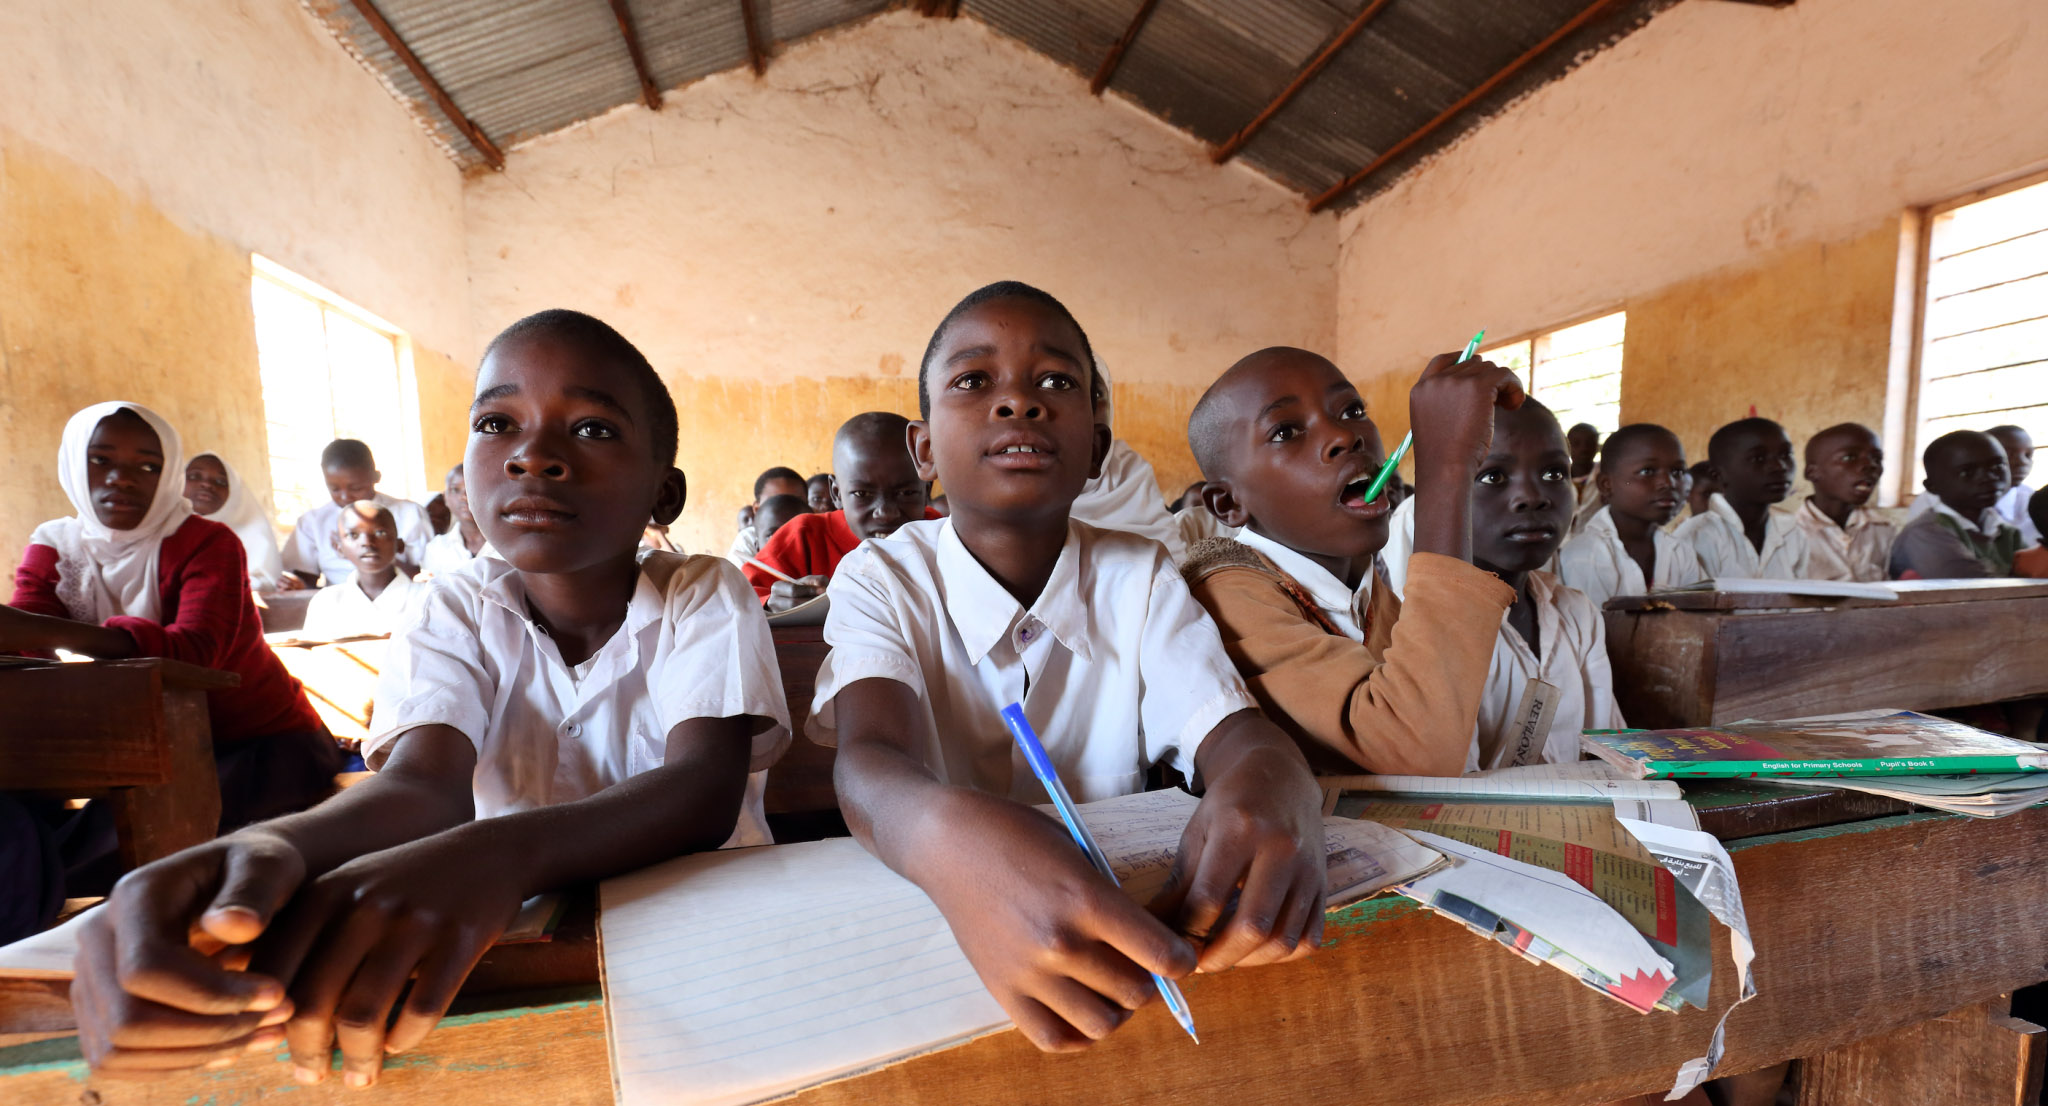 Primary school students in Tanzania